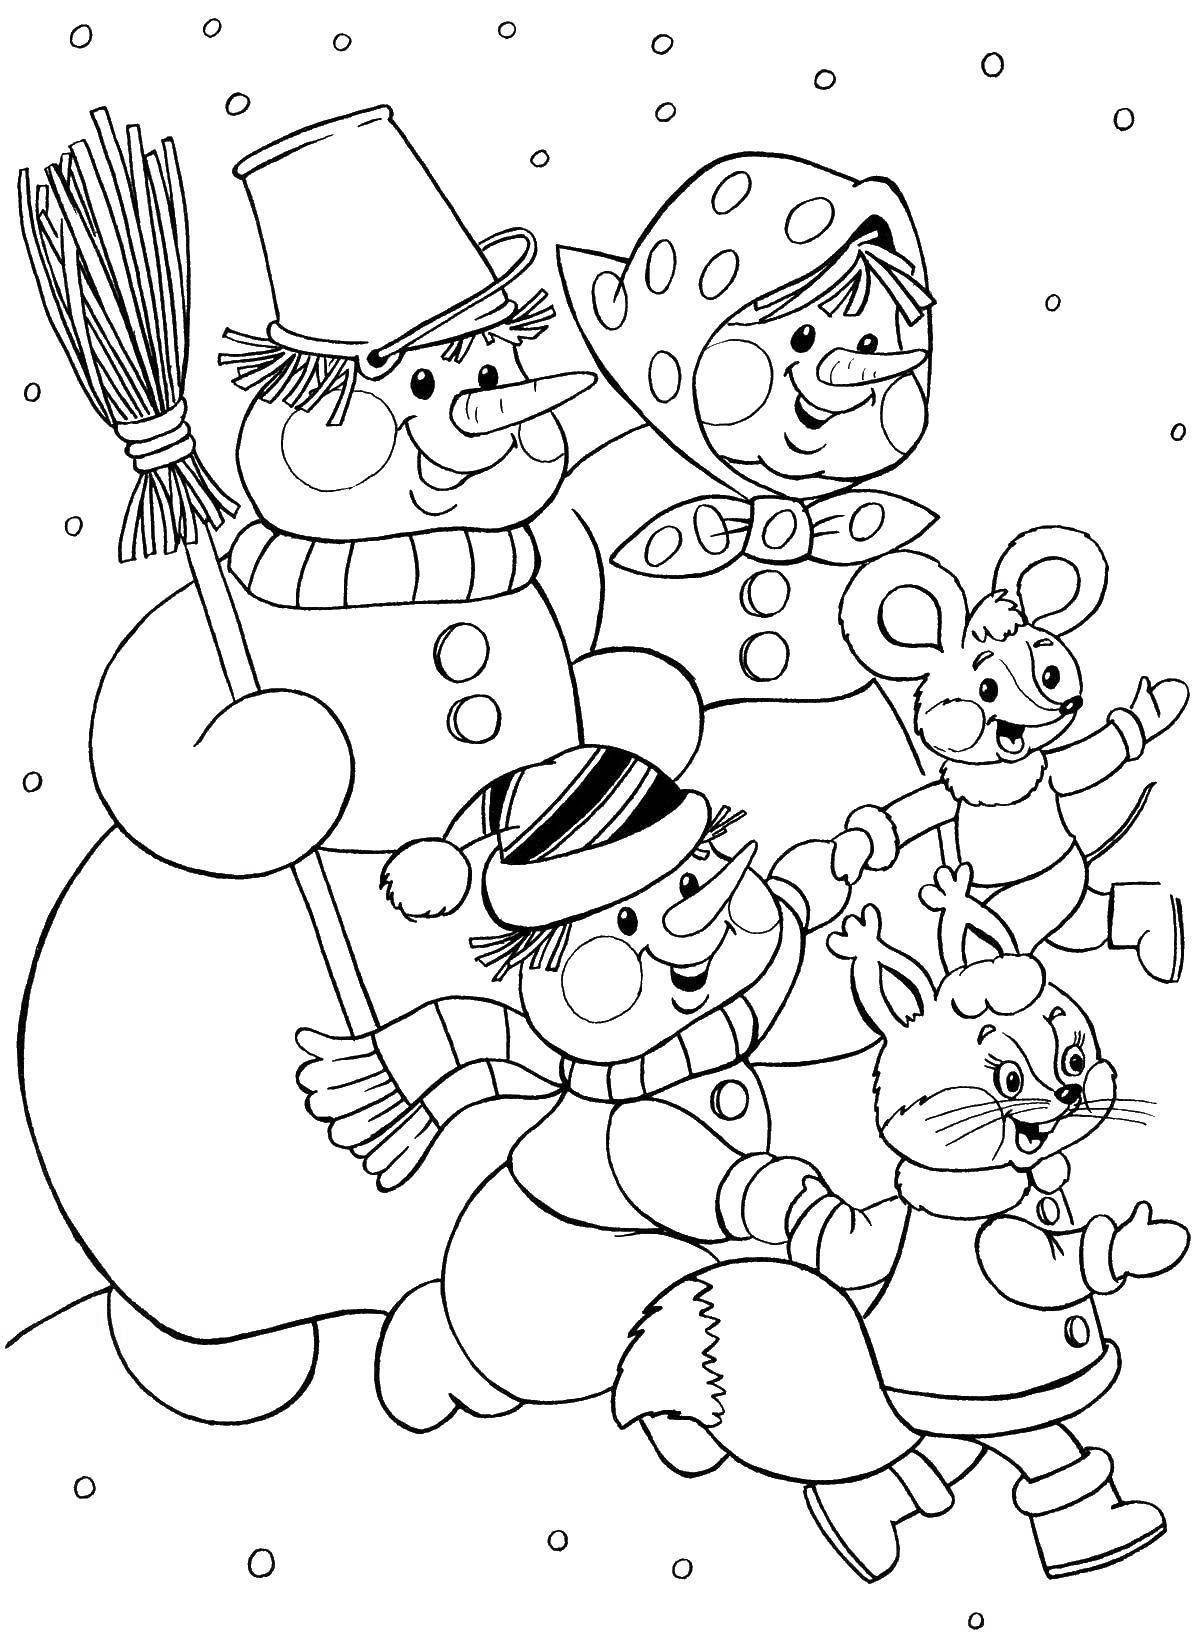 Coloring page joyful family of snowmen